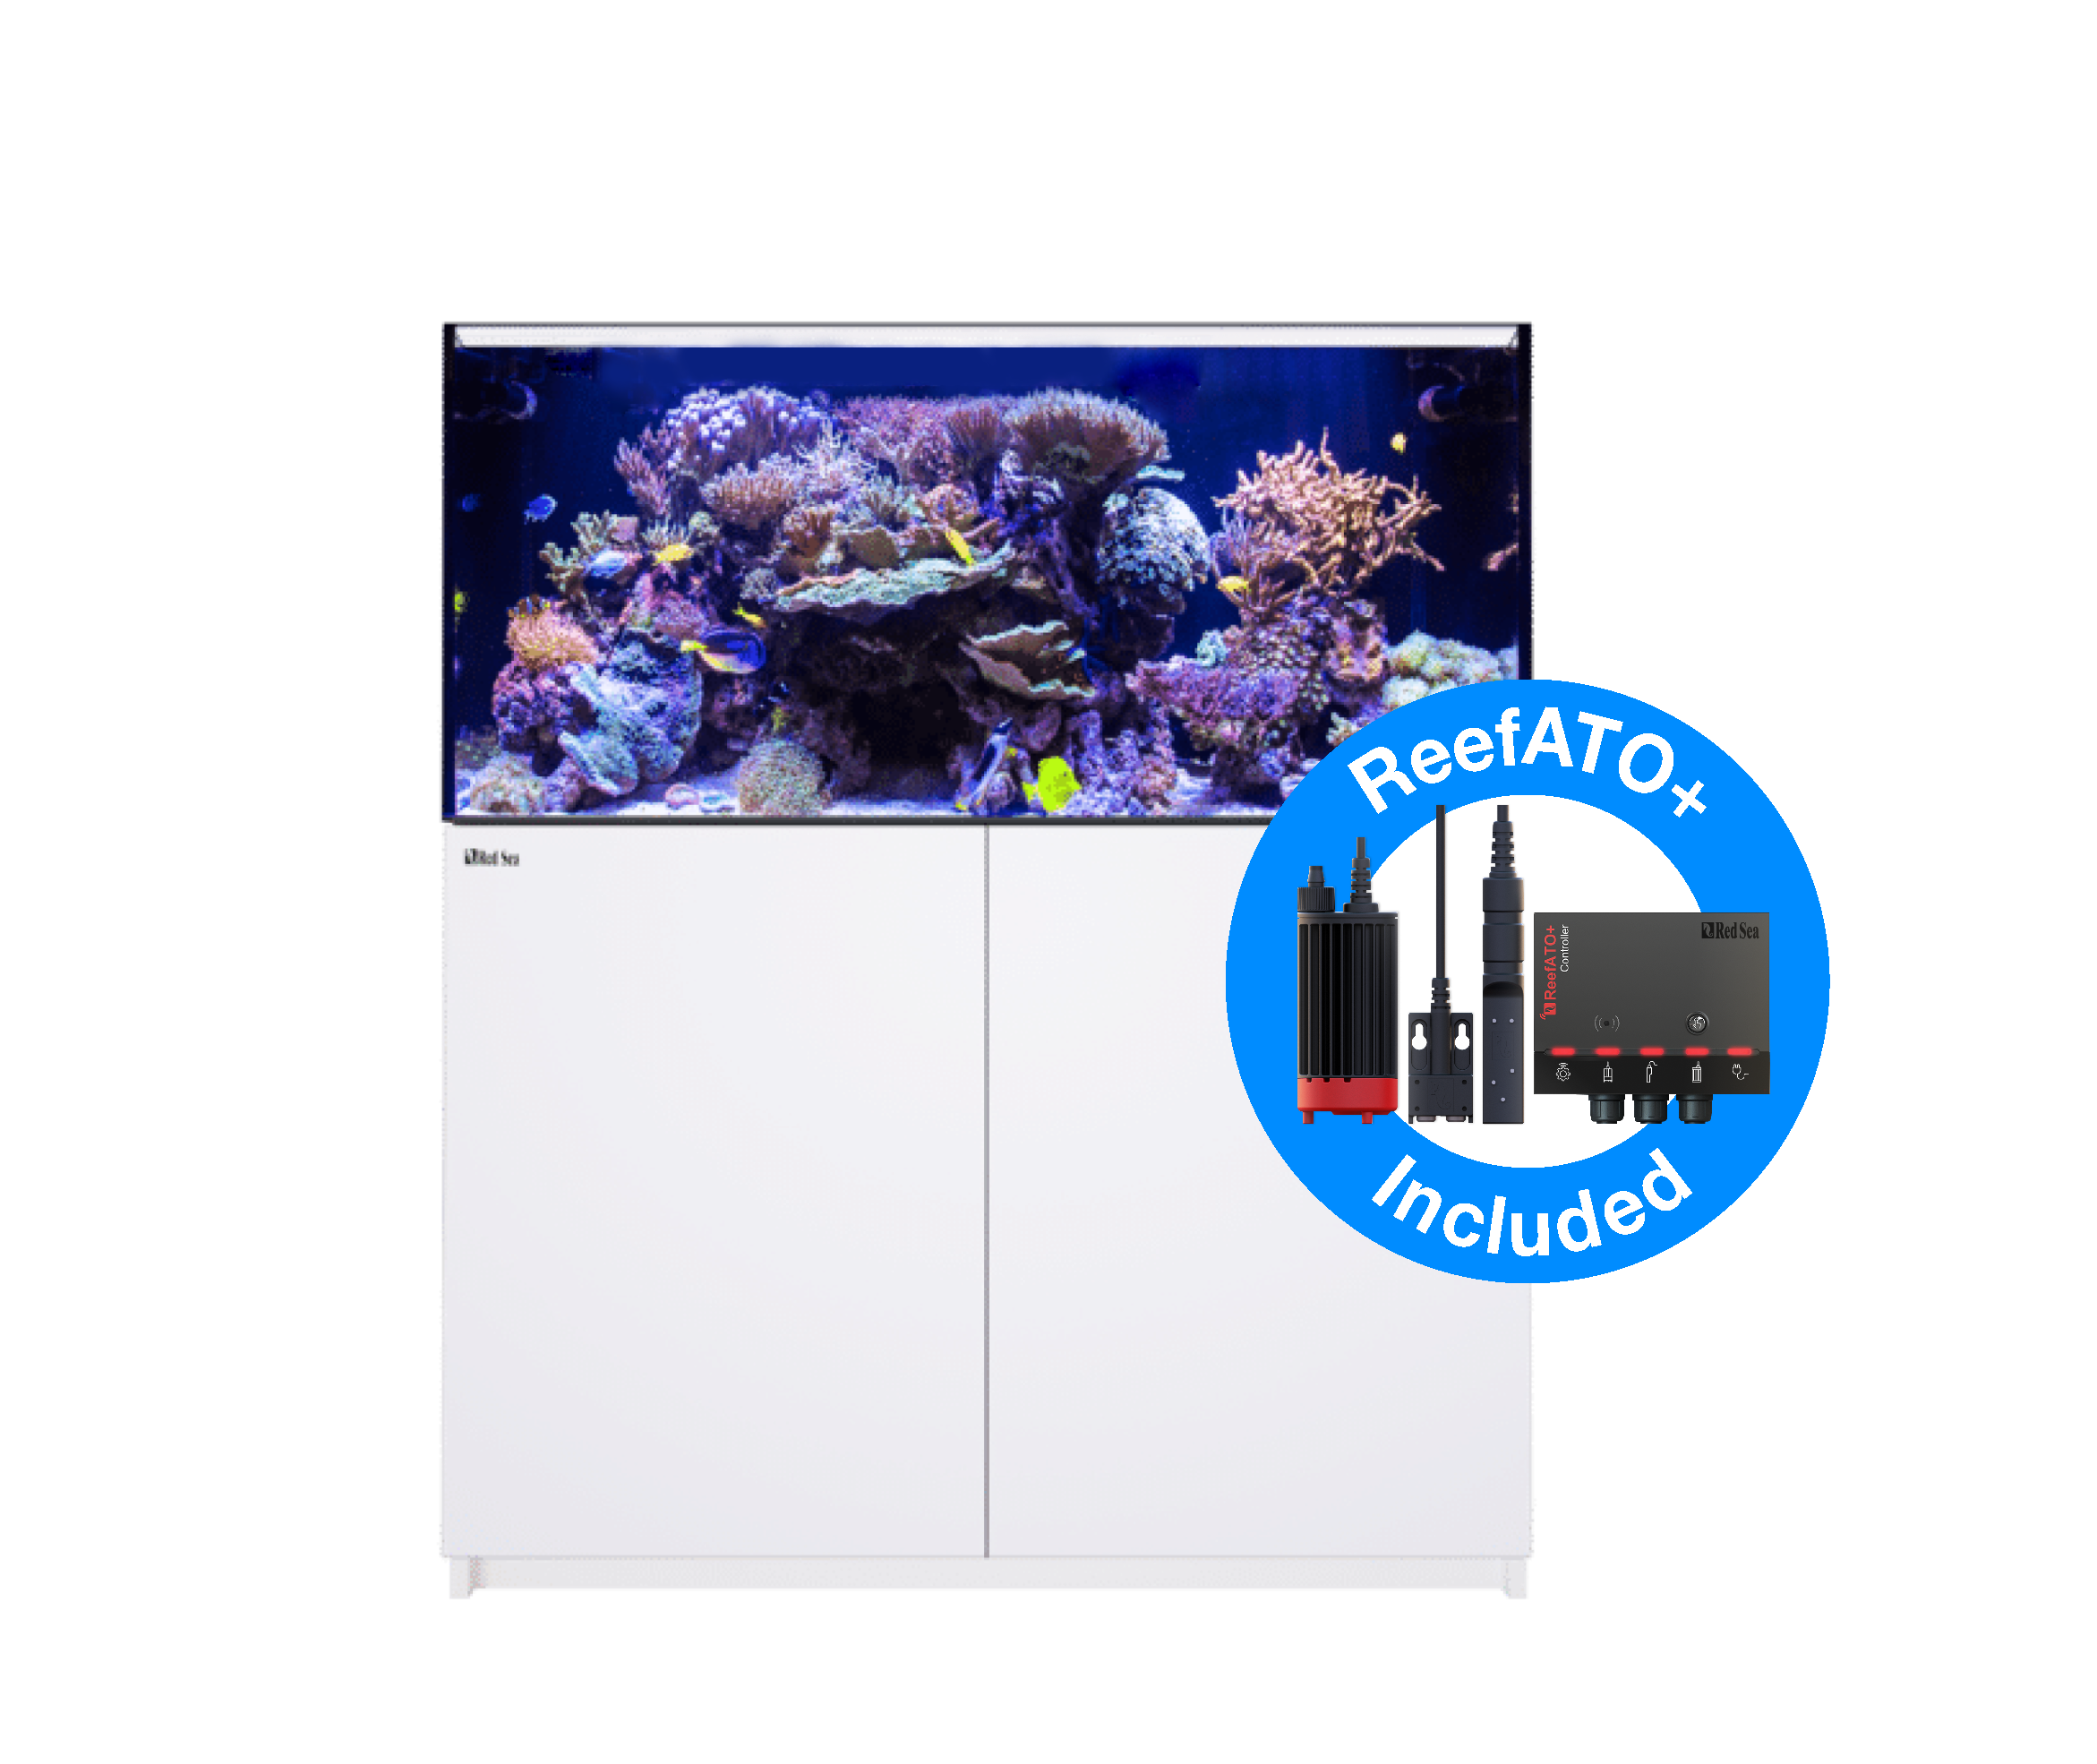 Red Sea Reefer G2+ XL 425 Deluxe Aquarium - White (2 x ReefLED 90)